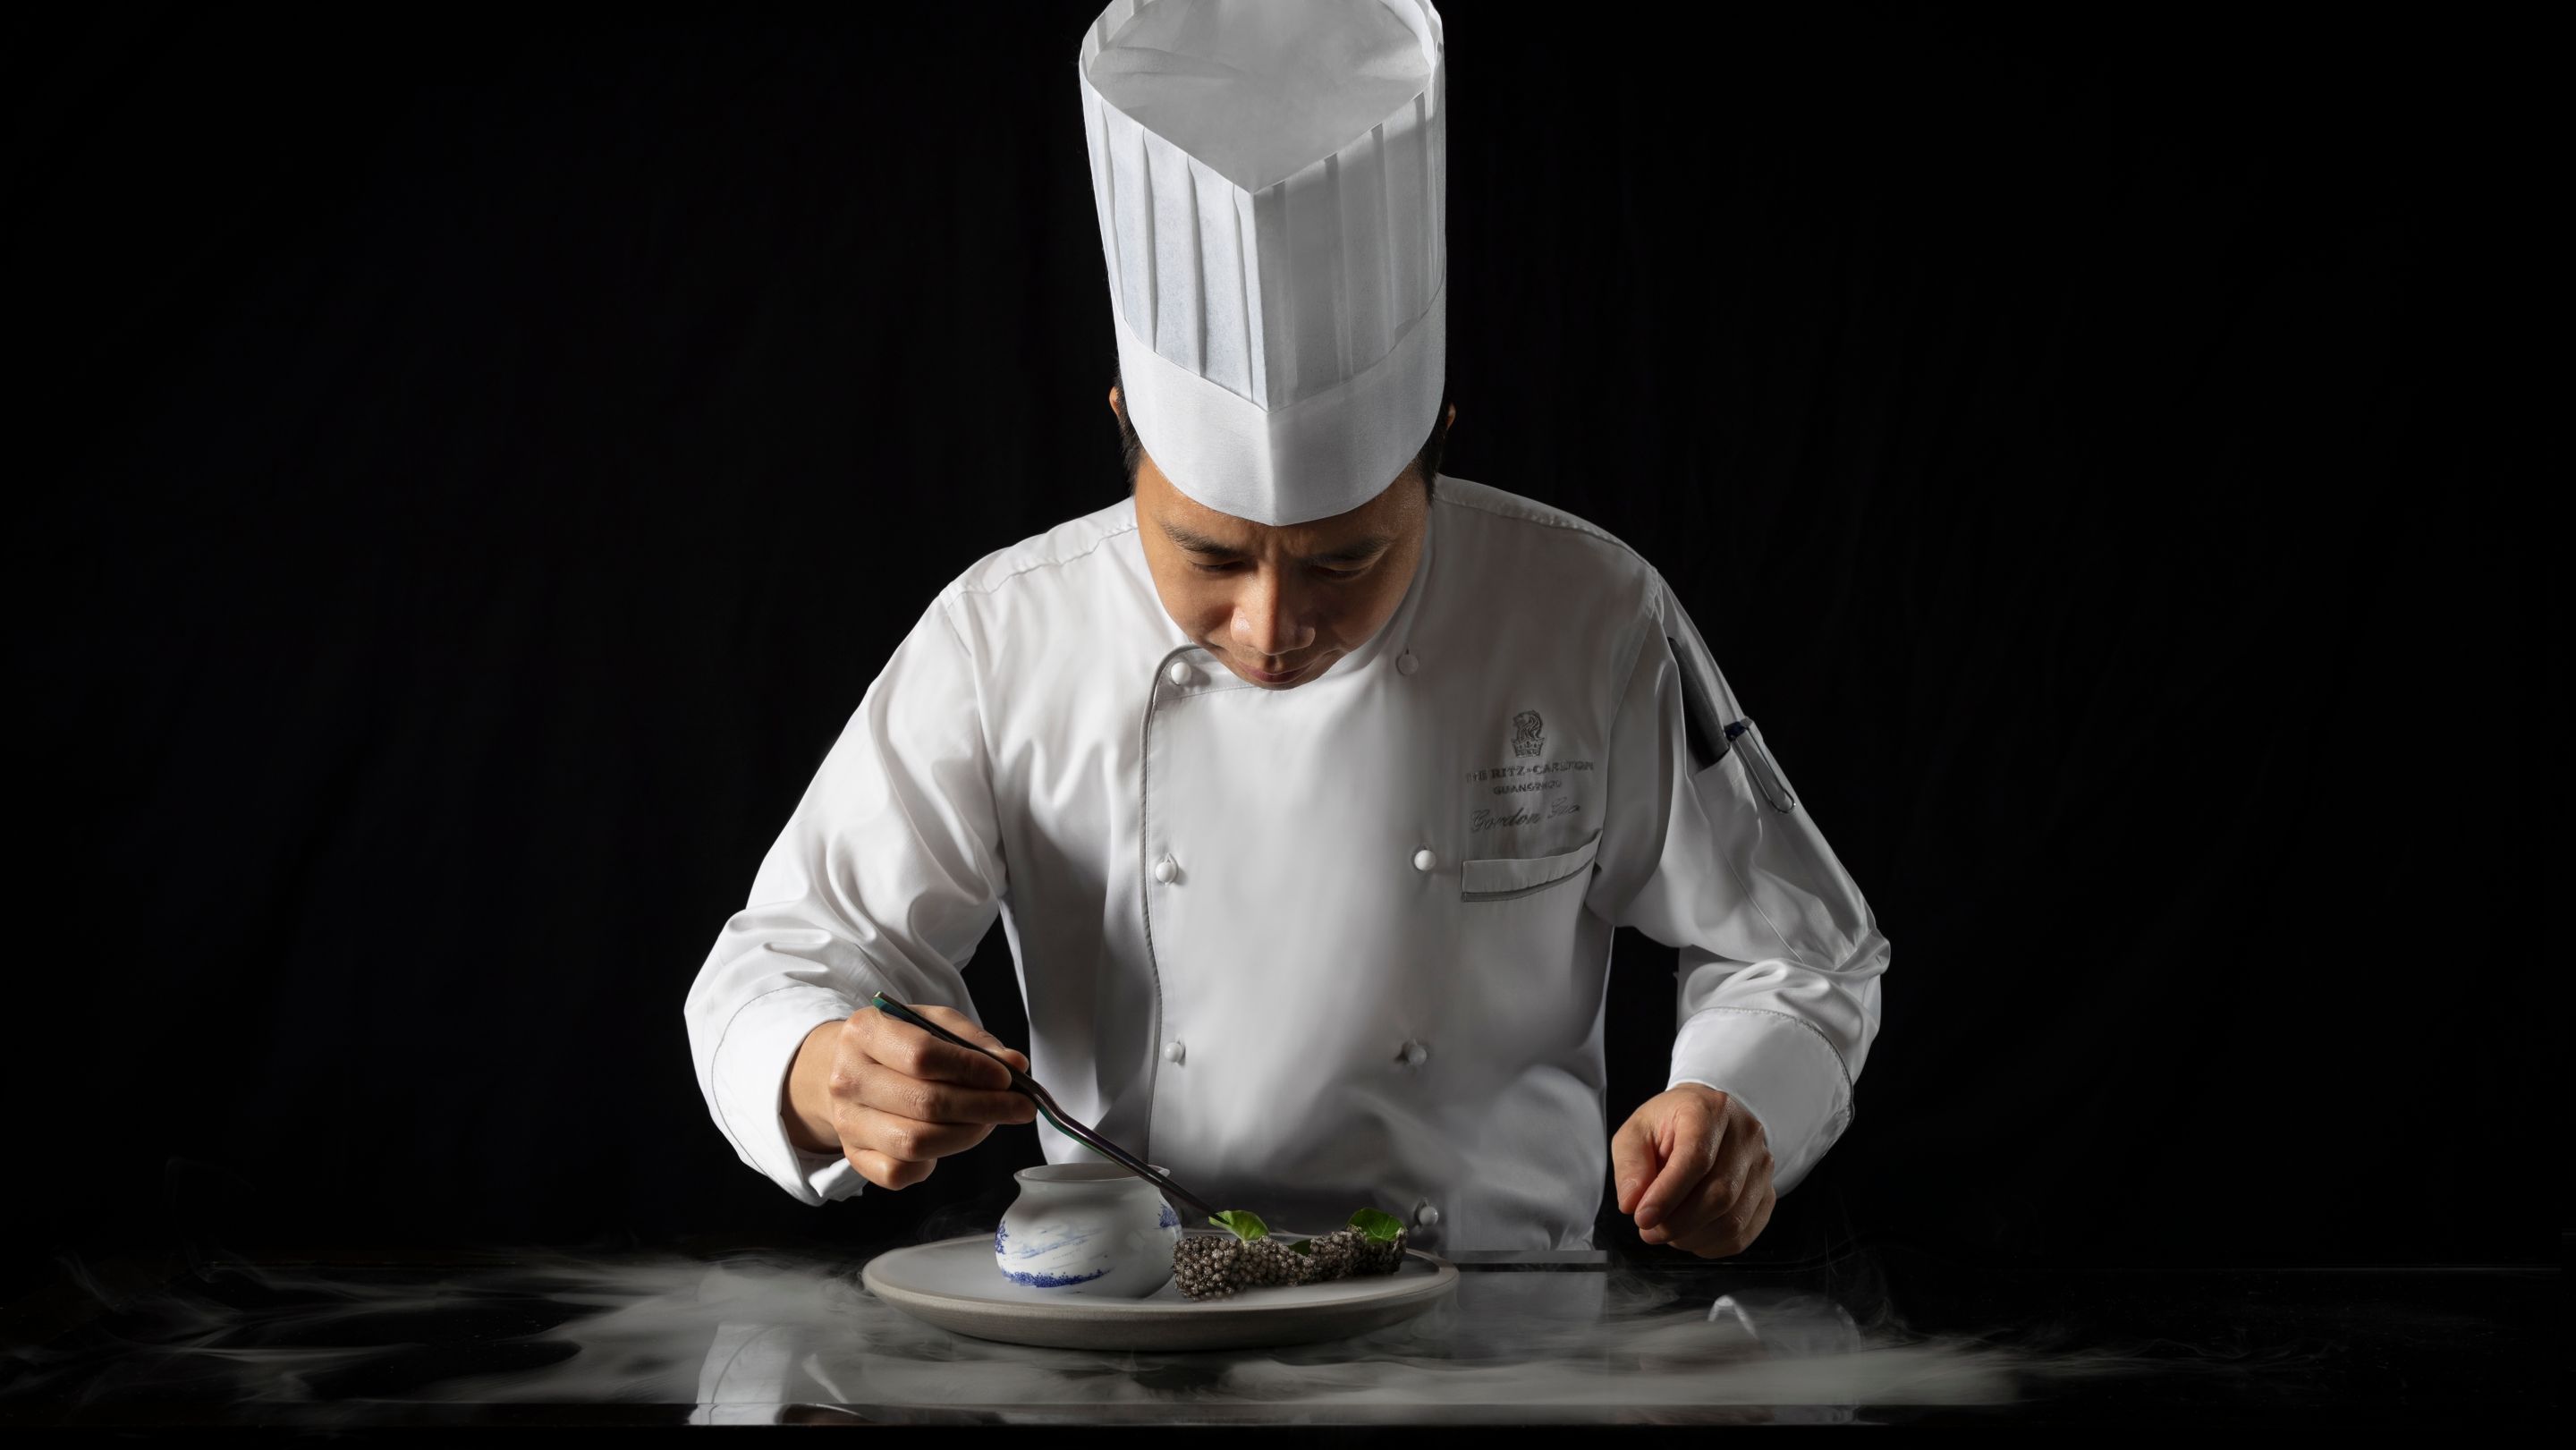 RCGZ Stellar Dining Michelin-starred Chef Gordon Guo